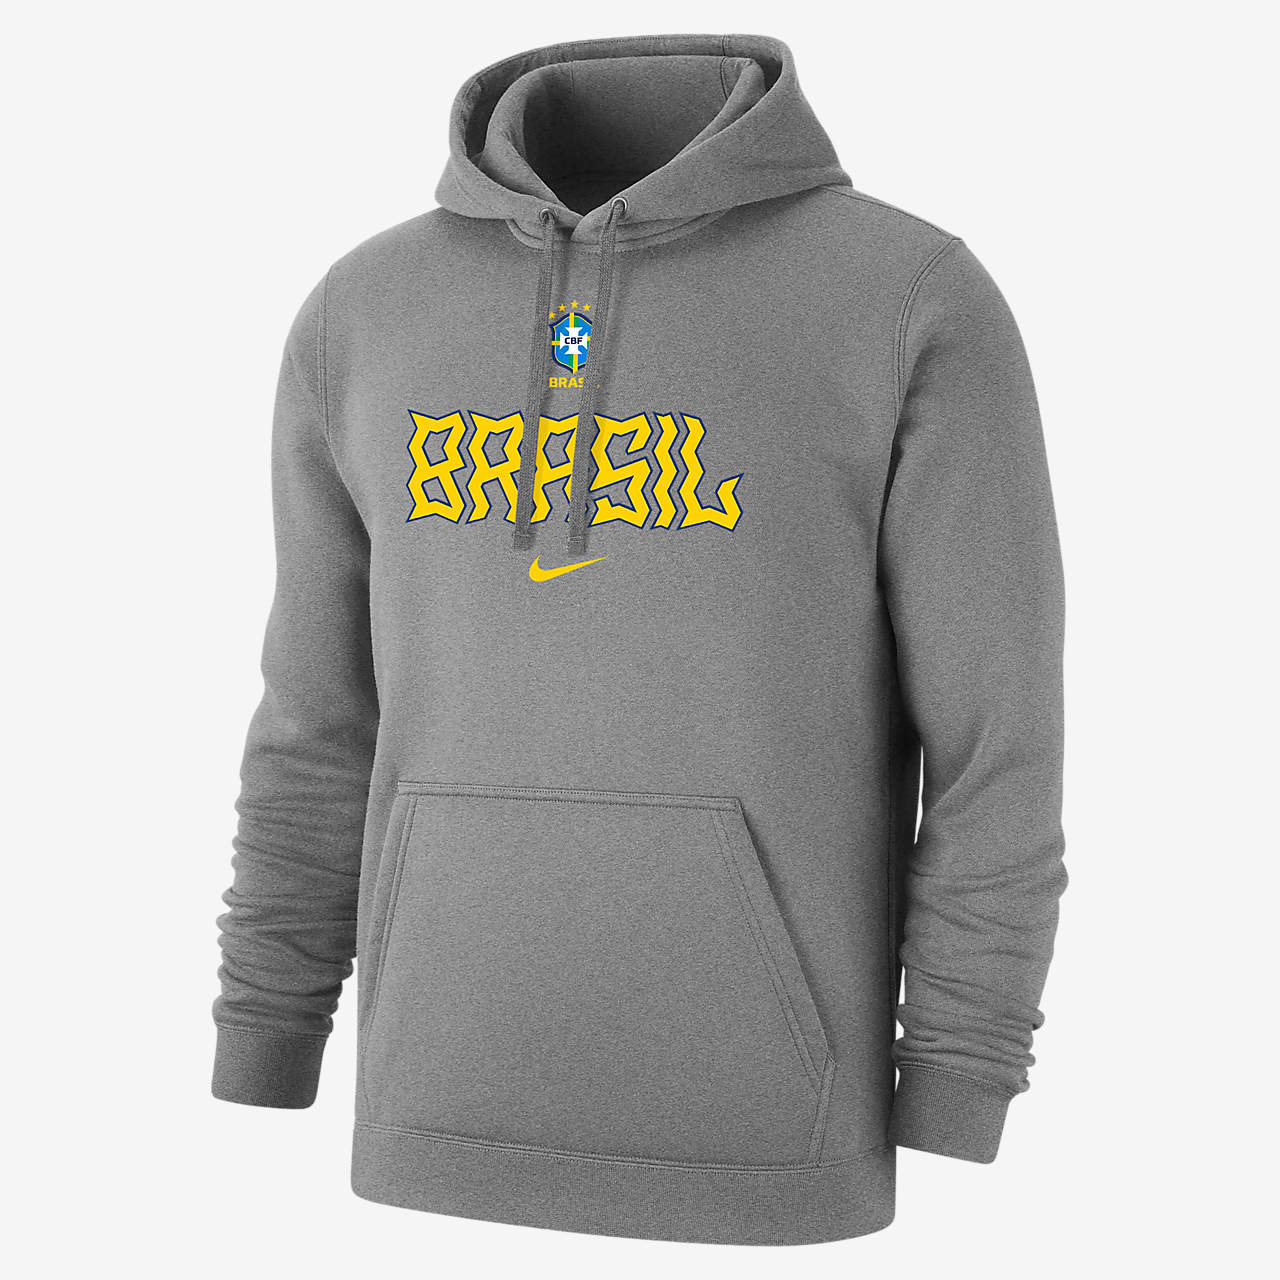 Nike Performance BRASIL CBF TRAVEL HOODIE - Zip-up sweatshirt